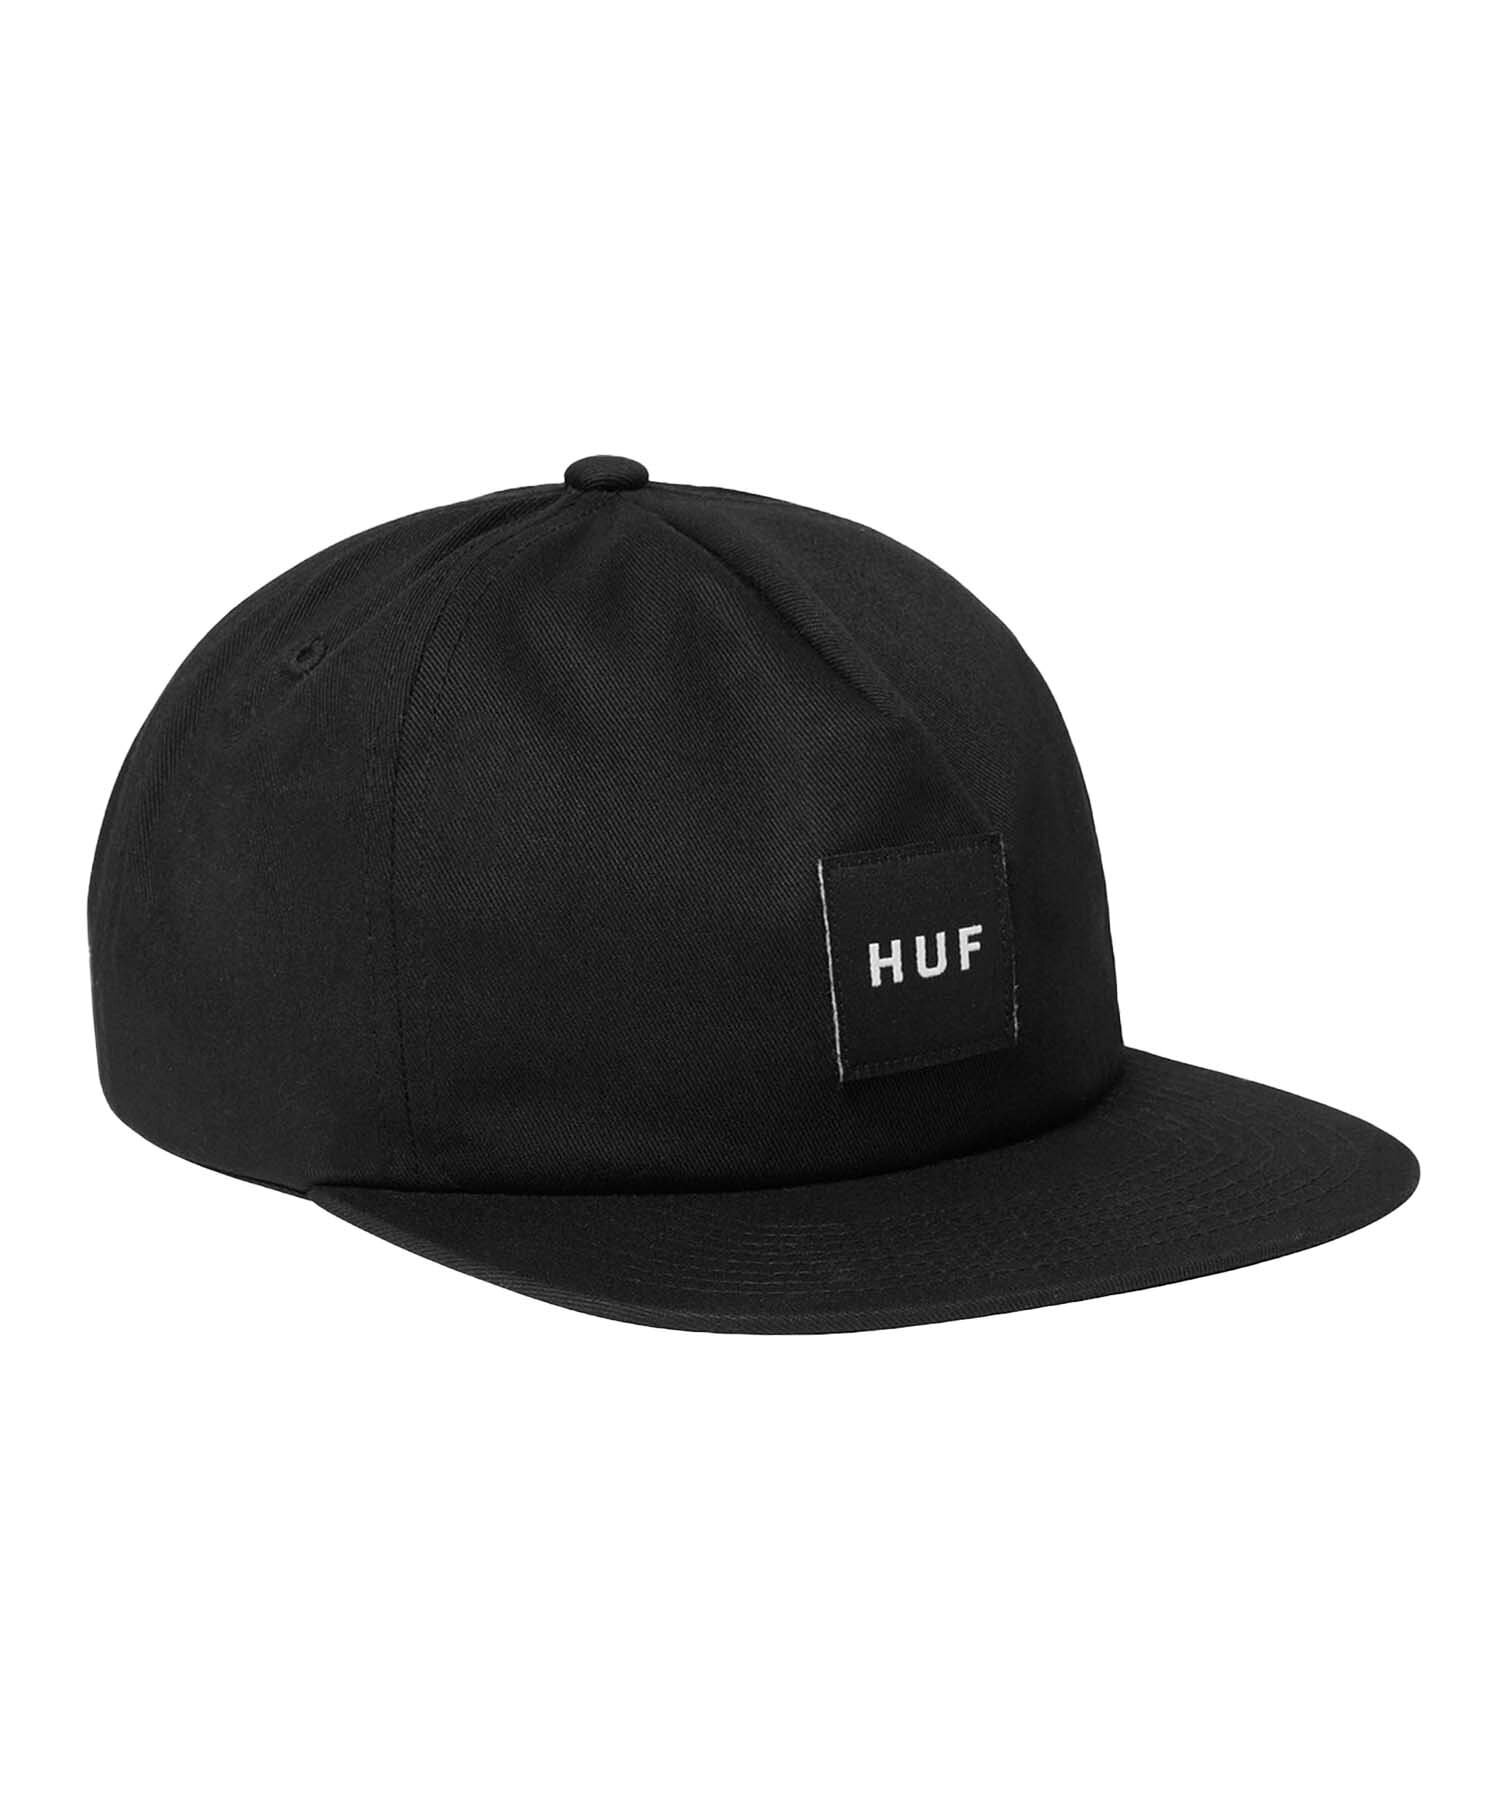 HUF SET BOX SNAPBACK HUF ハフ キャップ 帽子